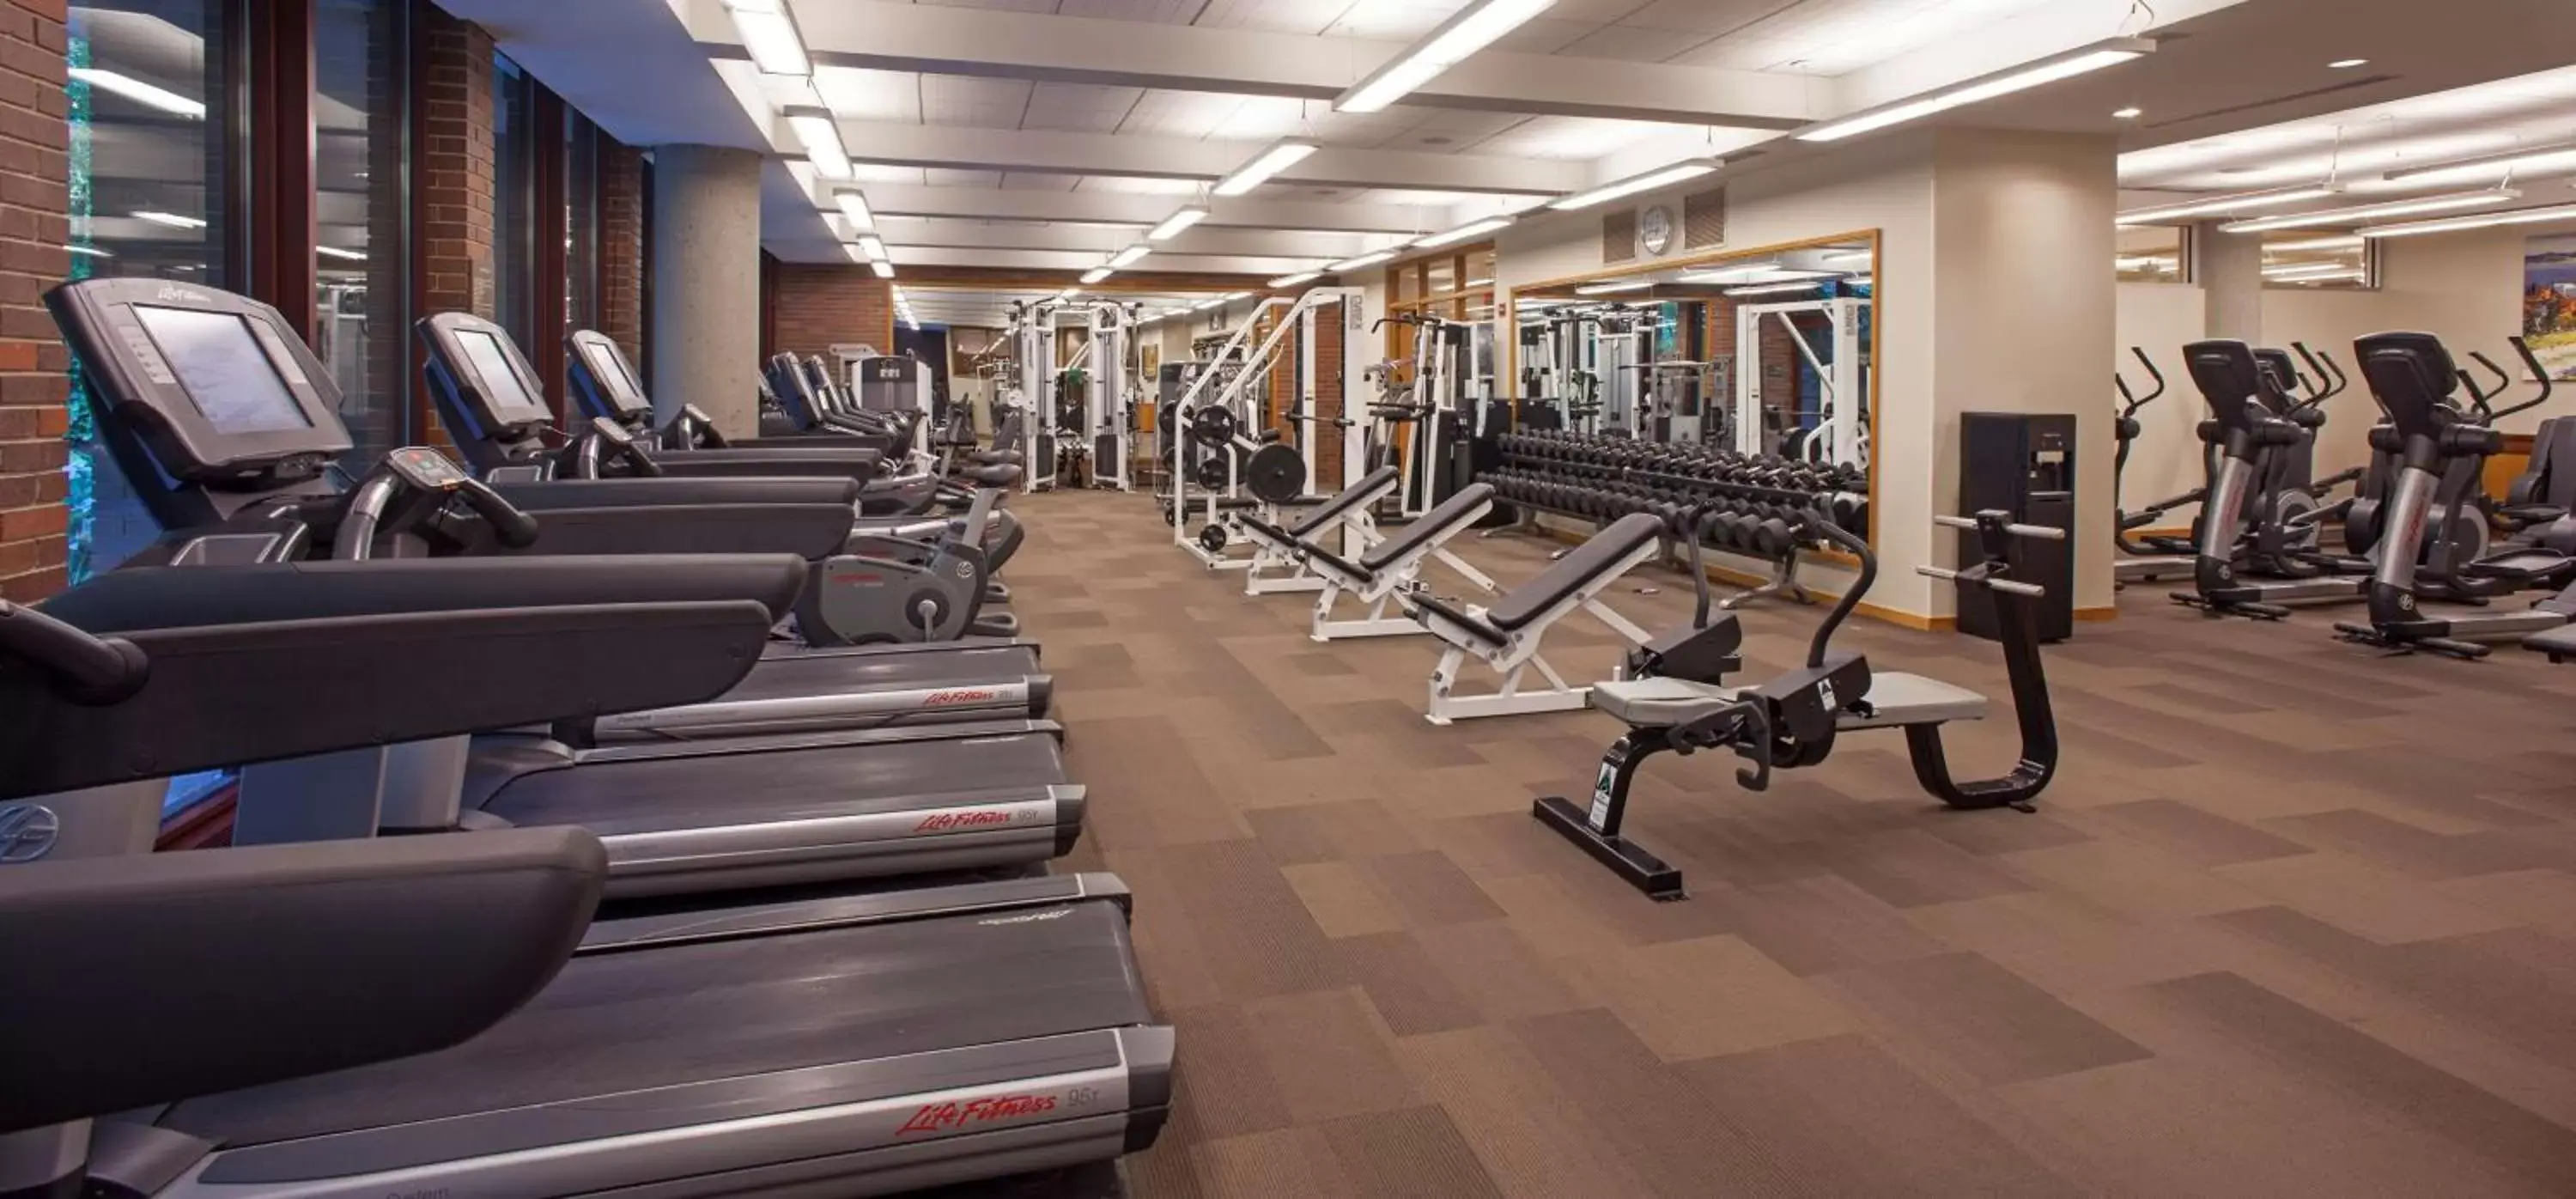 Fitness centre/facilities, Fitness Center/Facilities in Hyatt Lodge Oak Brook Chicago